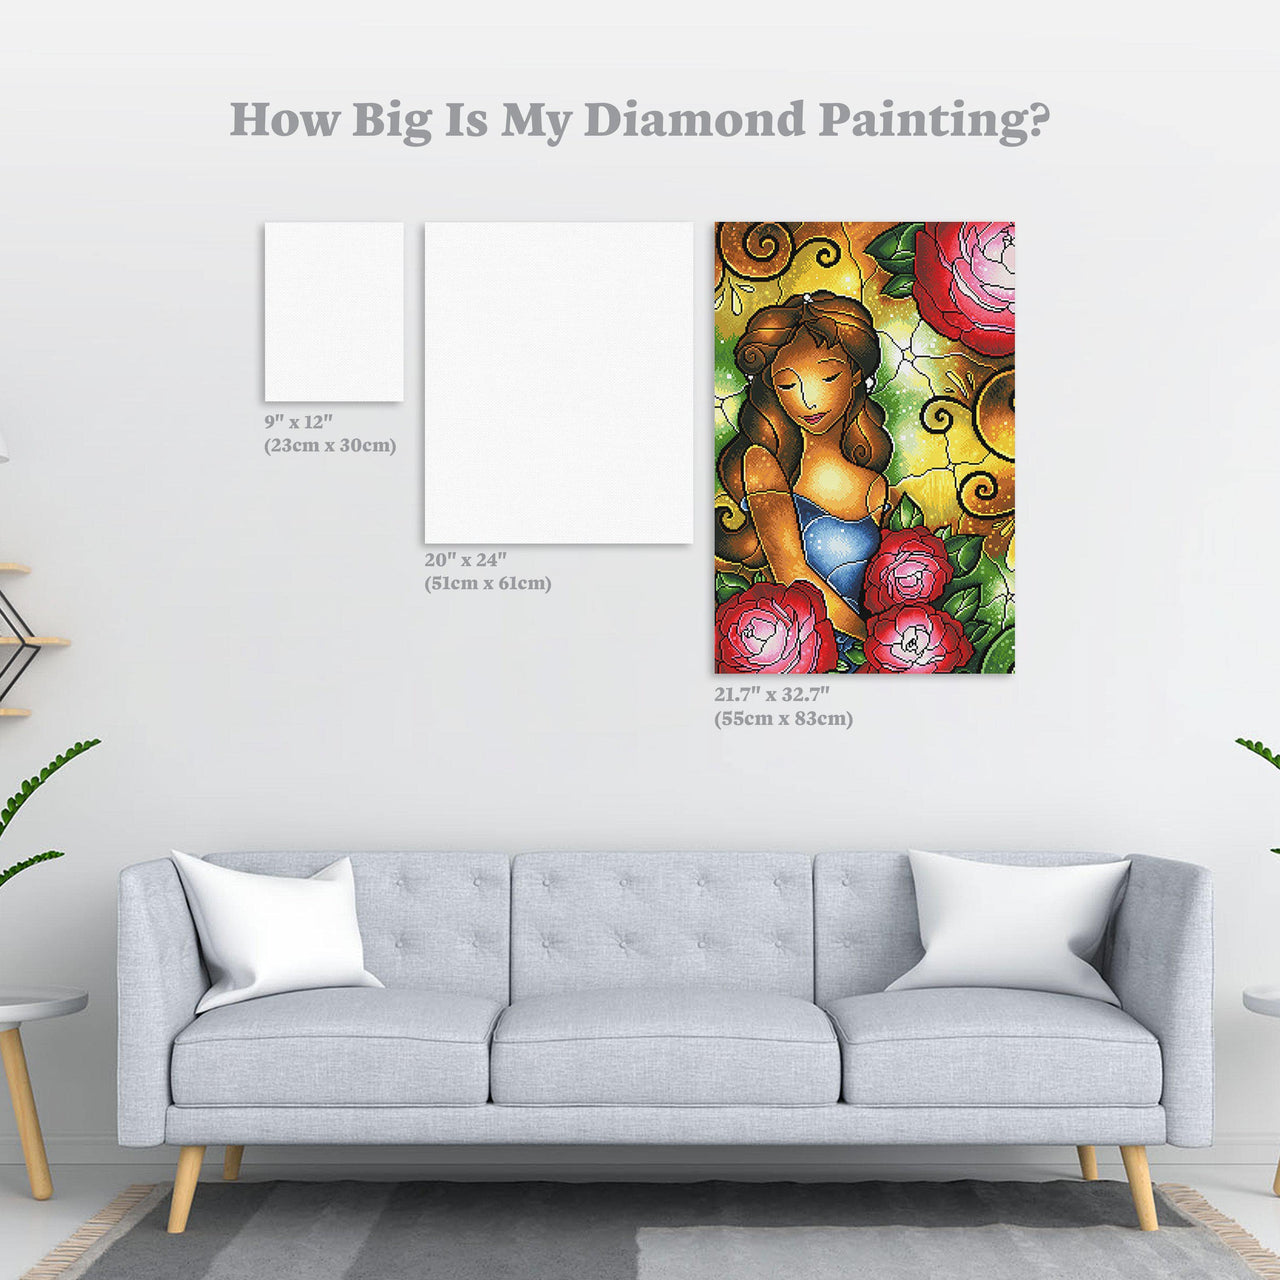 Diamond Painting Camellia Lady 21.7″ x 32.7″ (55cm x 83cm) / Round With Aurora Borealis Accents / 57,329